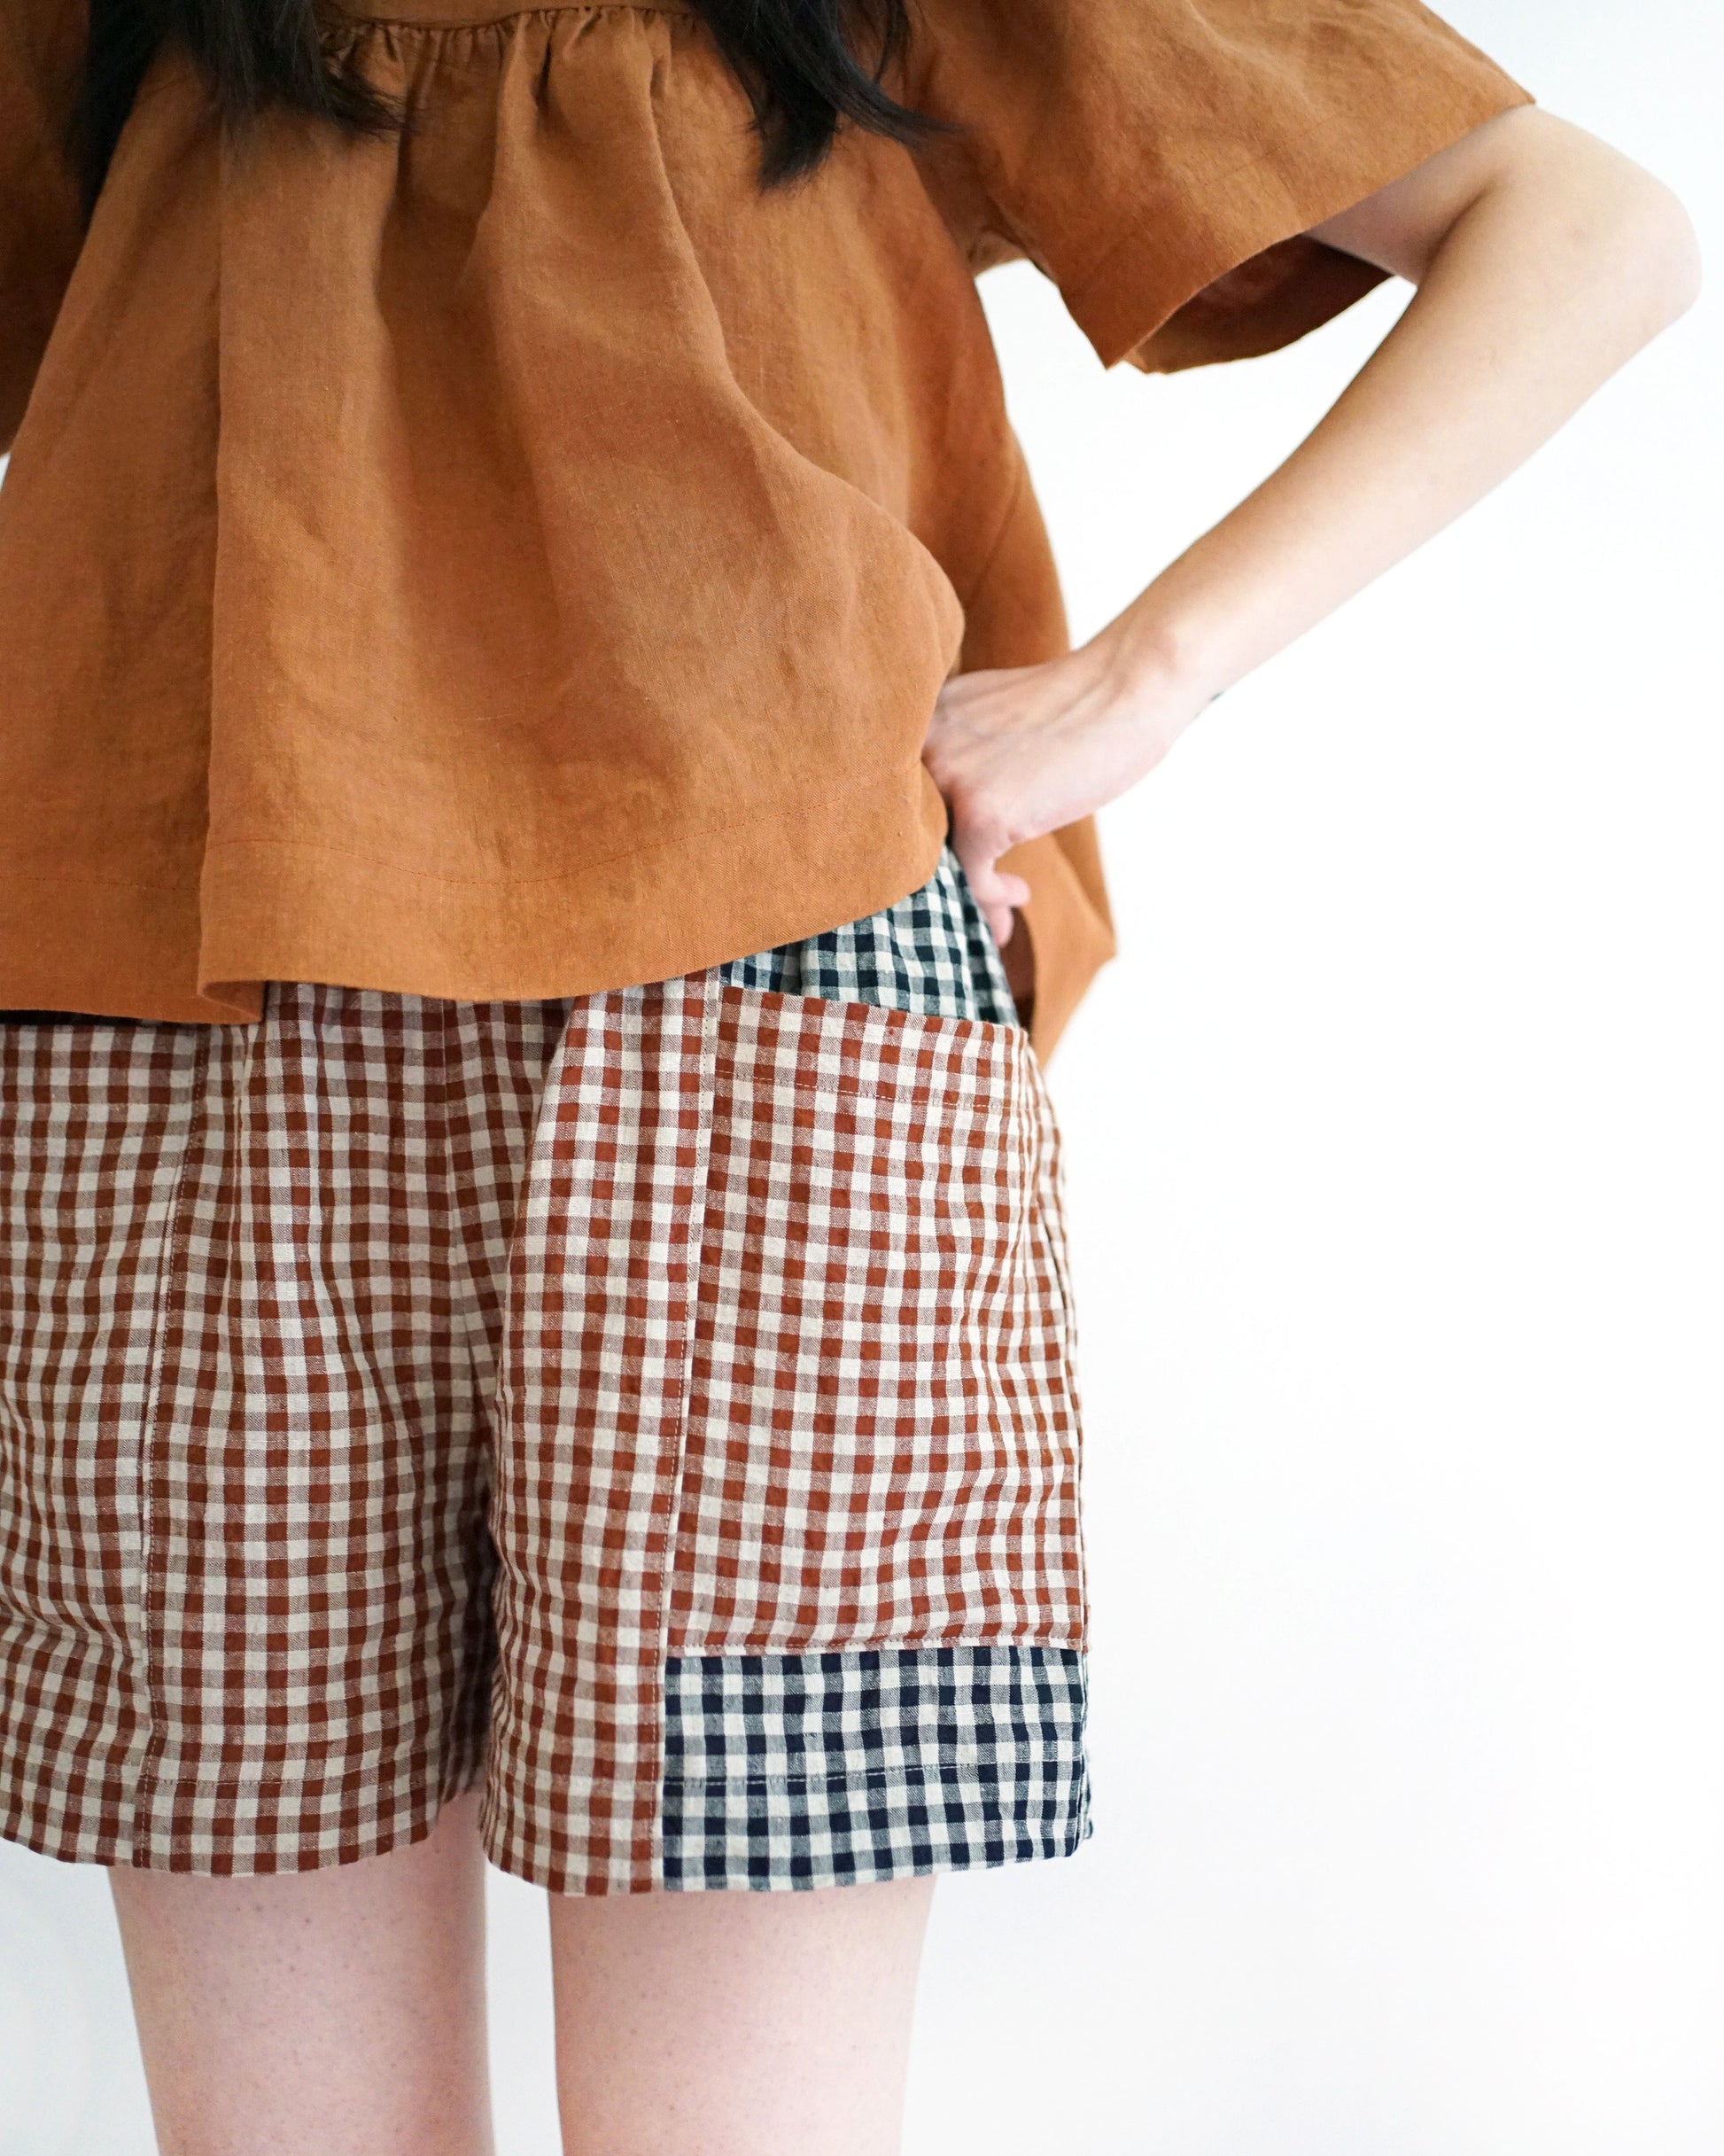 Recess Play Pants PDF Sewing Pattern